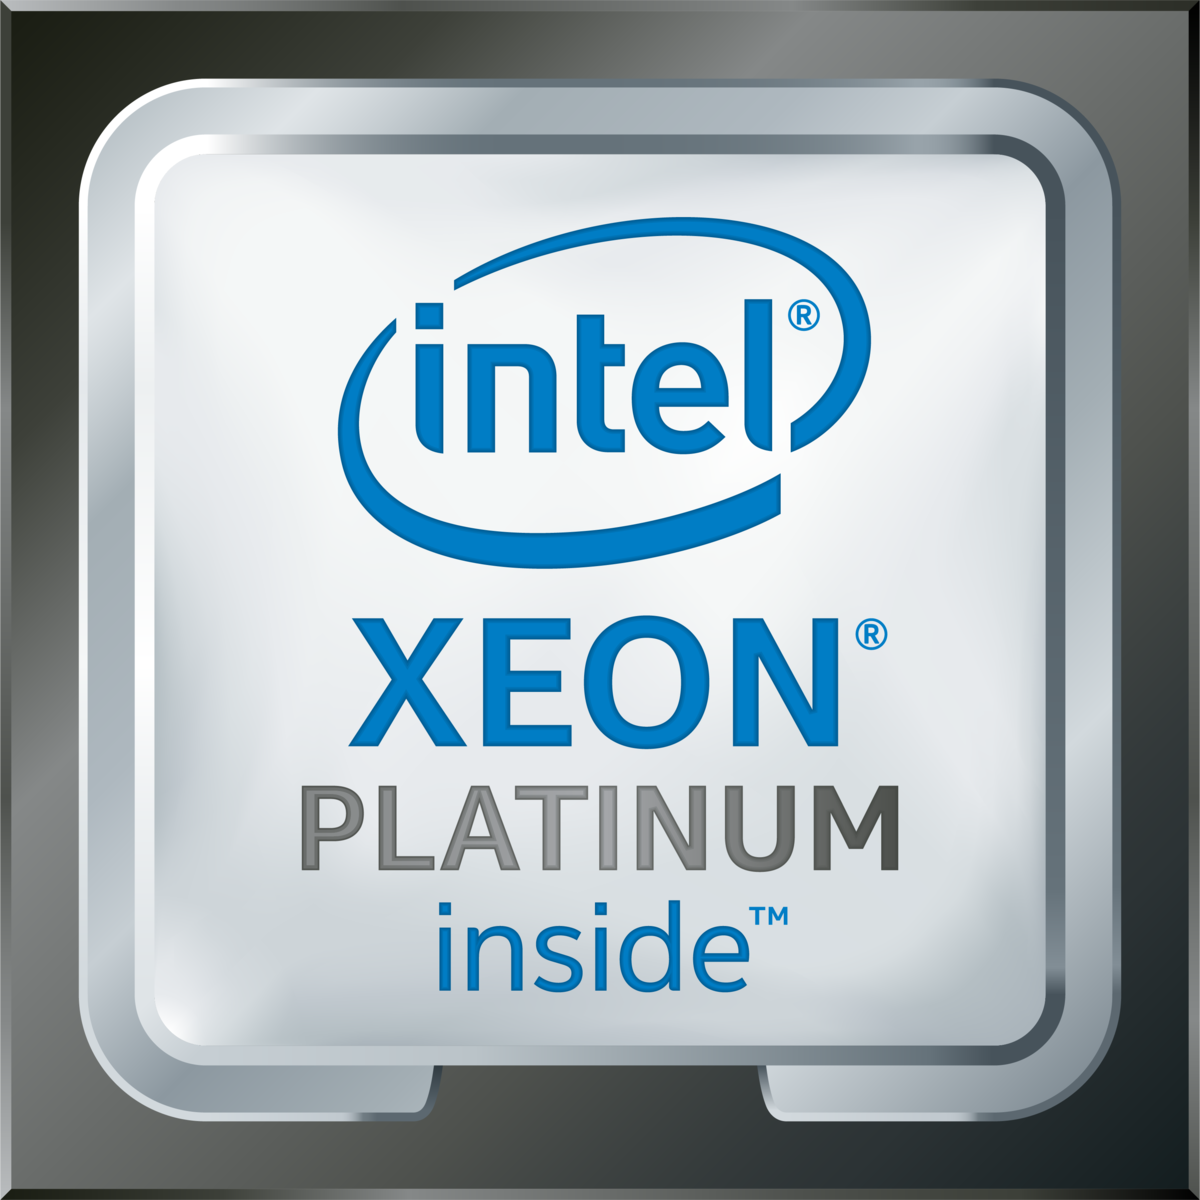 Intel(R) Xeon(R) Platinum 8272CL CPU @ 2.60GHz's logo